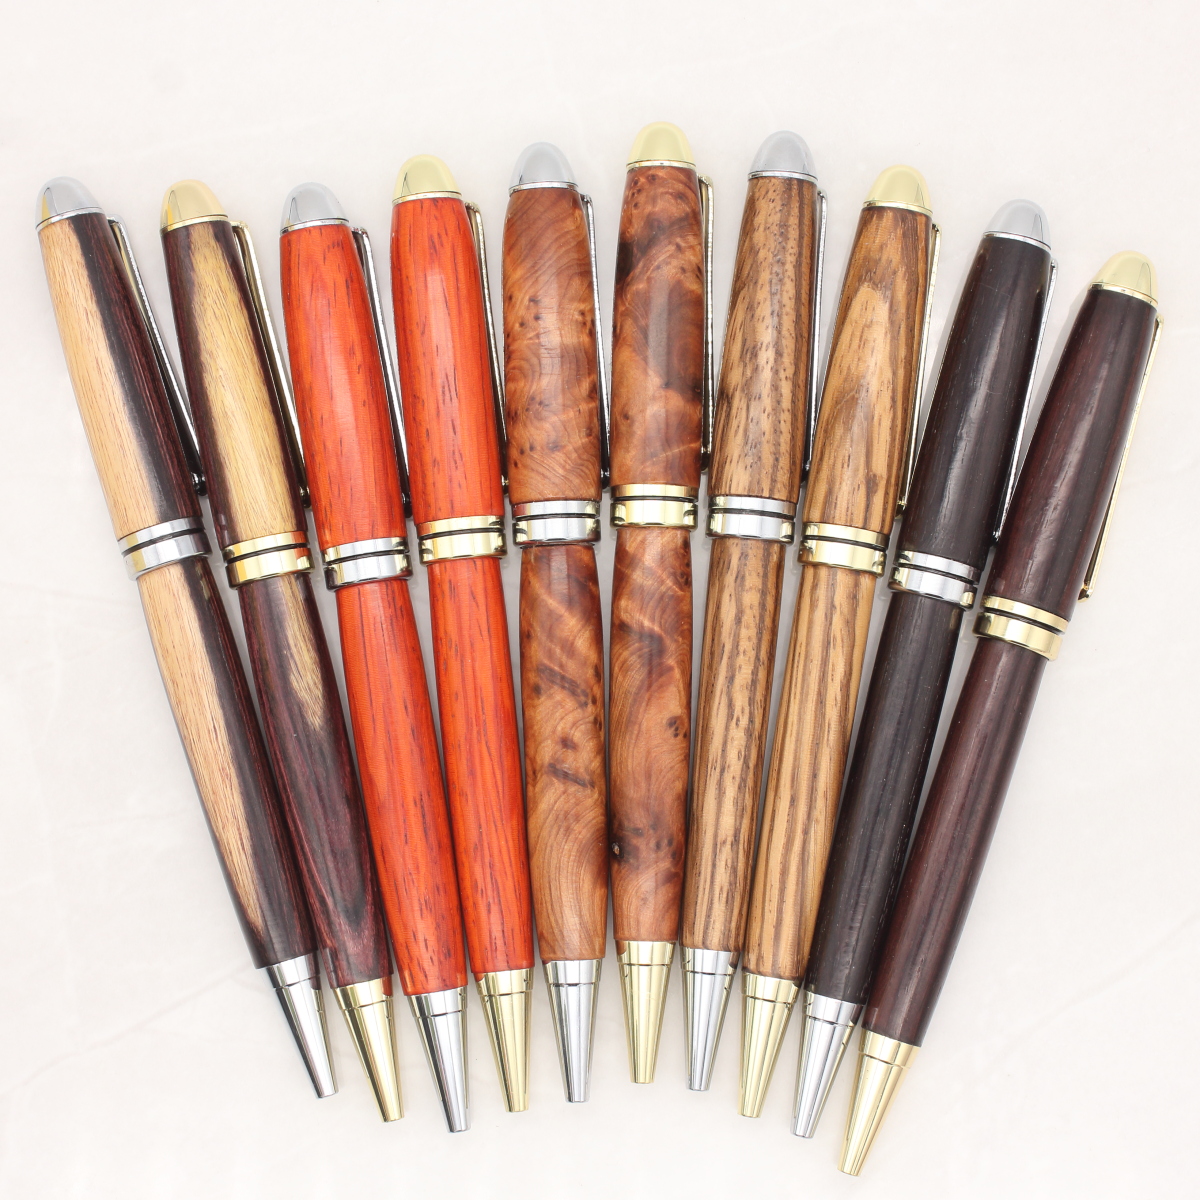 Euro-style wood pens